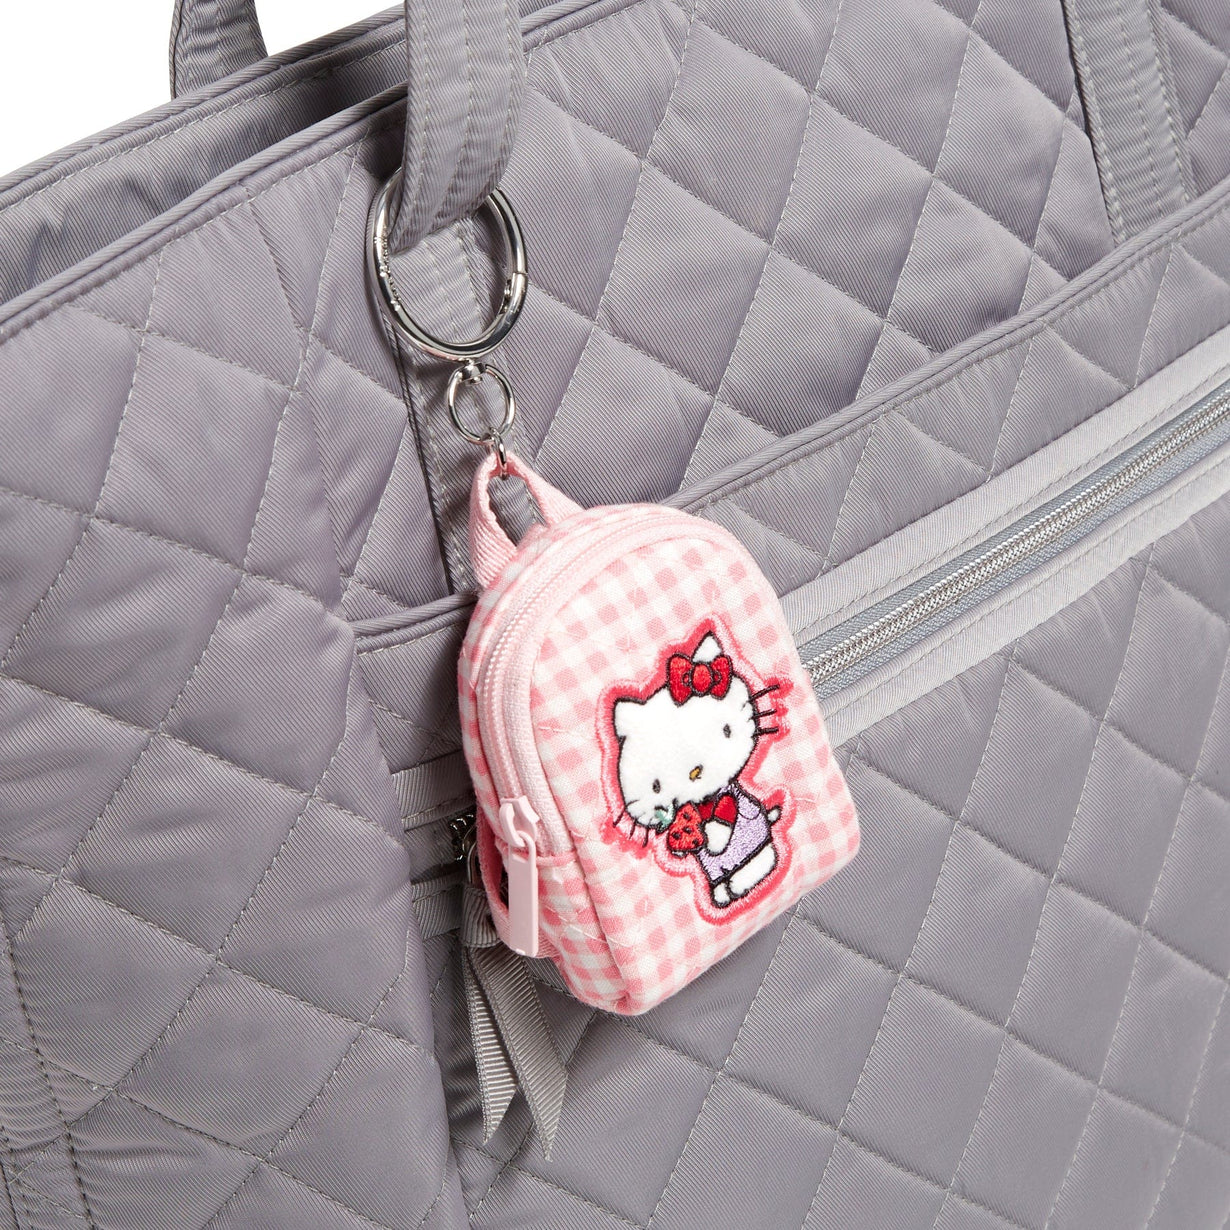 red apples hello kitty mini purse | Hello kitty purse, Pretty bags, Bags